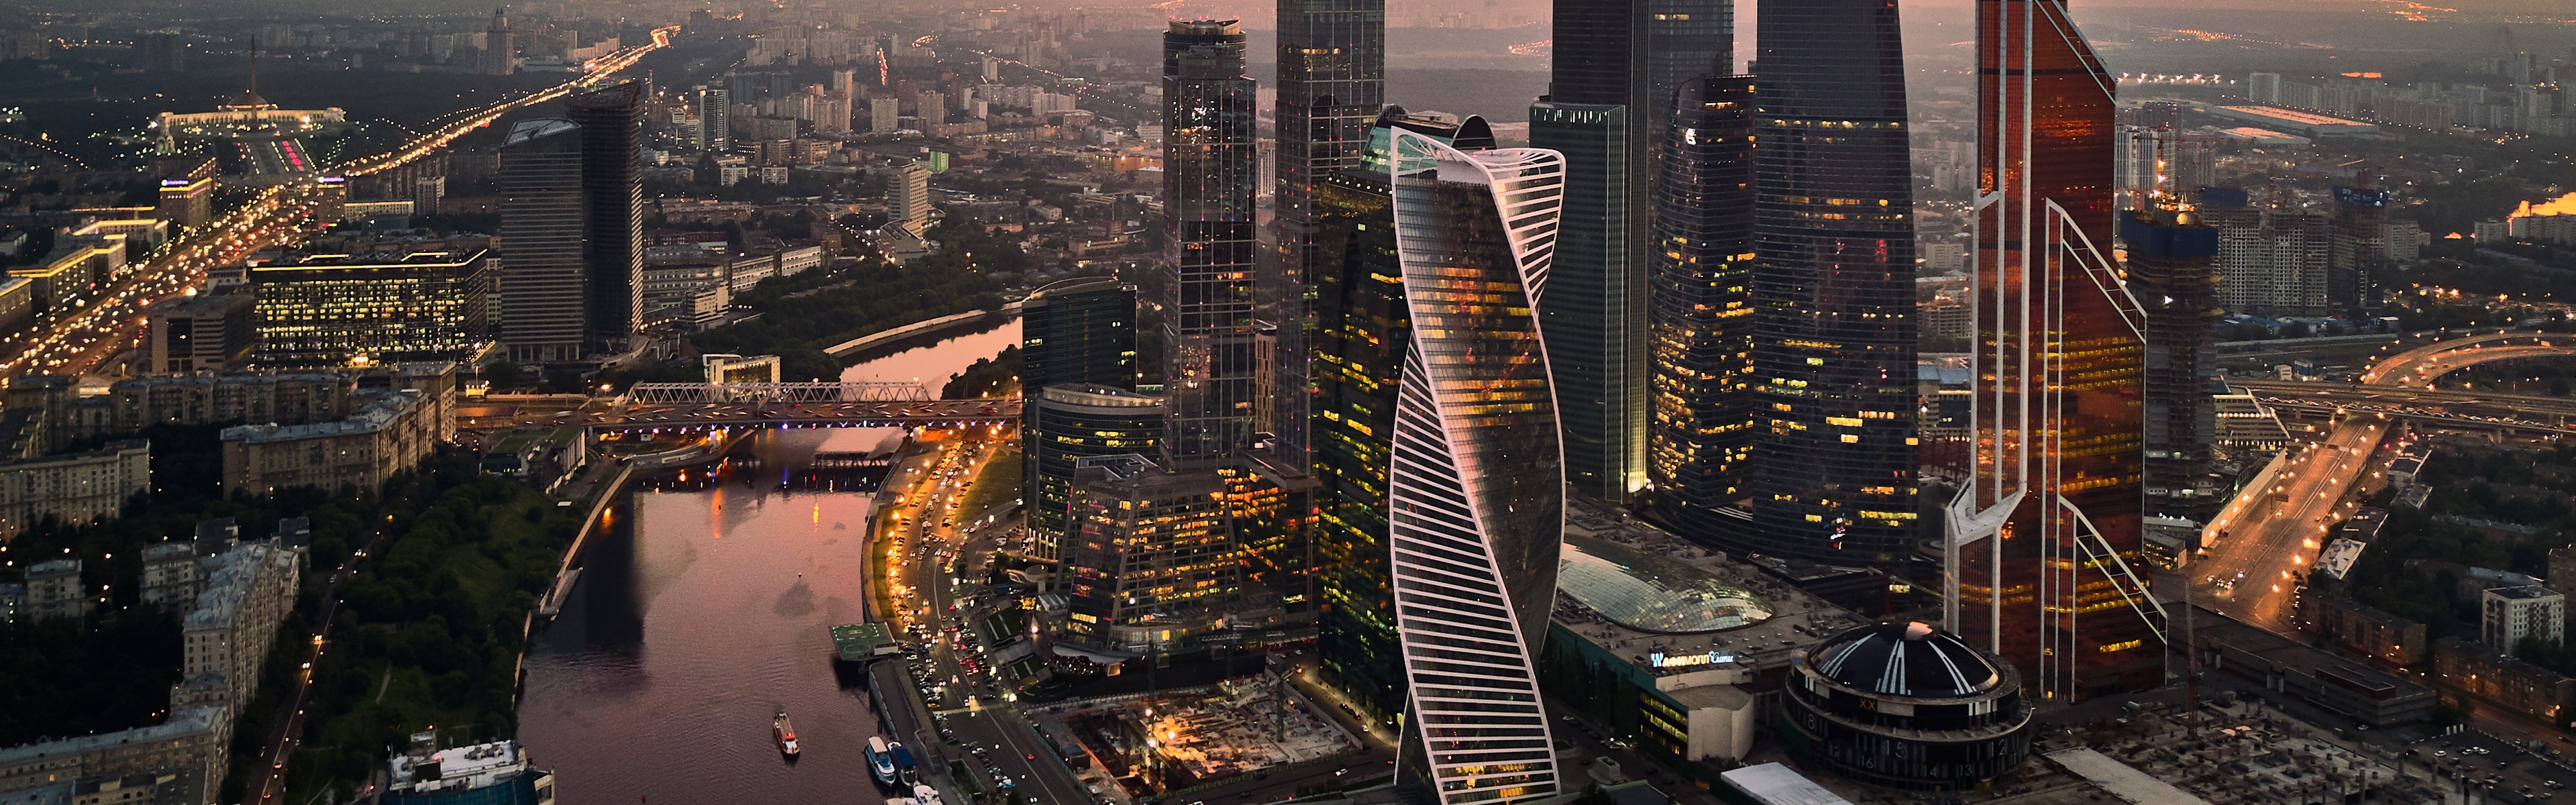 Moscow International Business Center